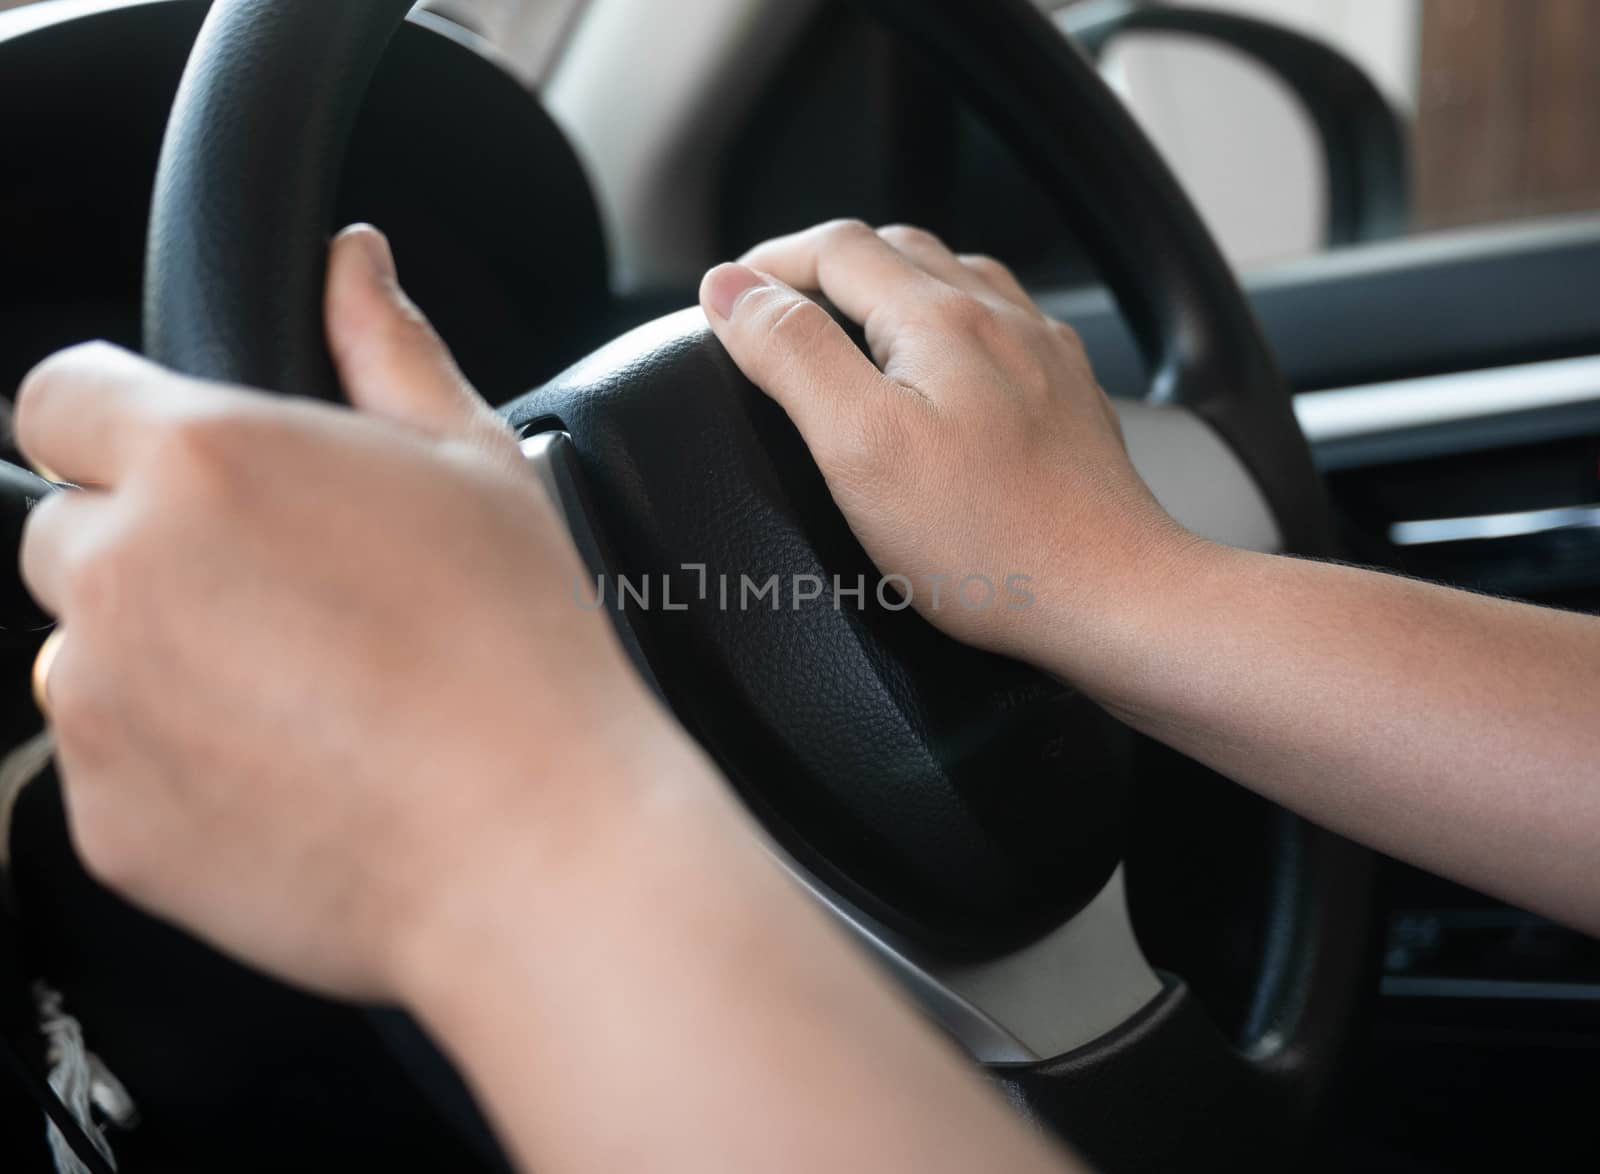 Close up inside vehicle of female hand pushing on steering wheel by TEERASAK